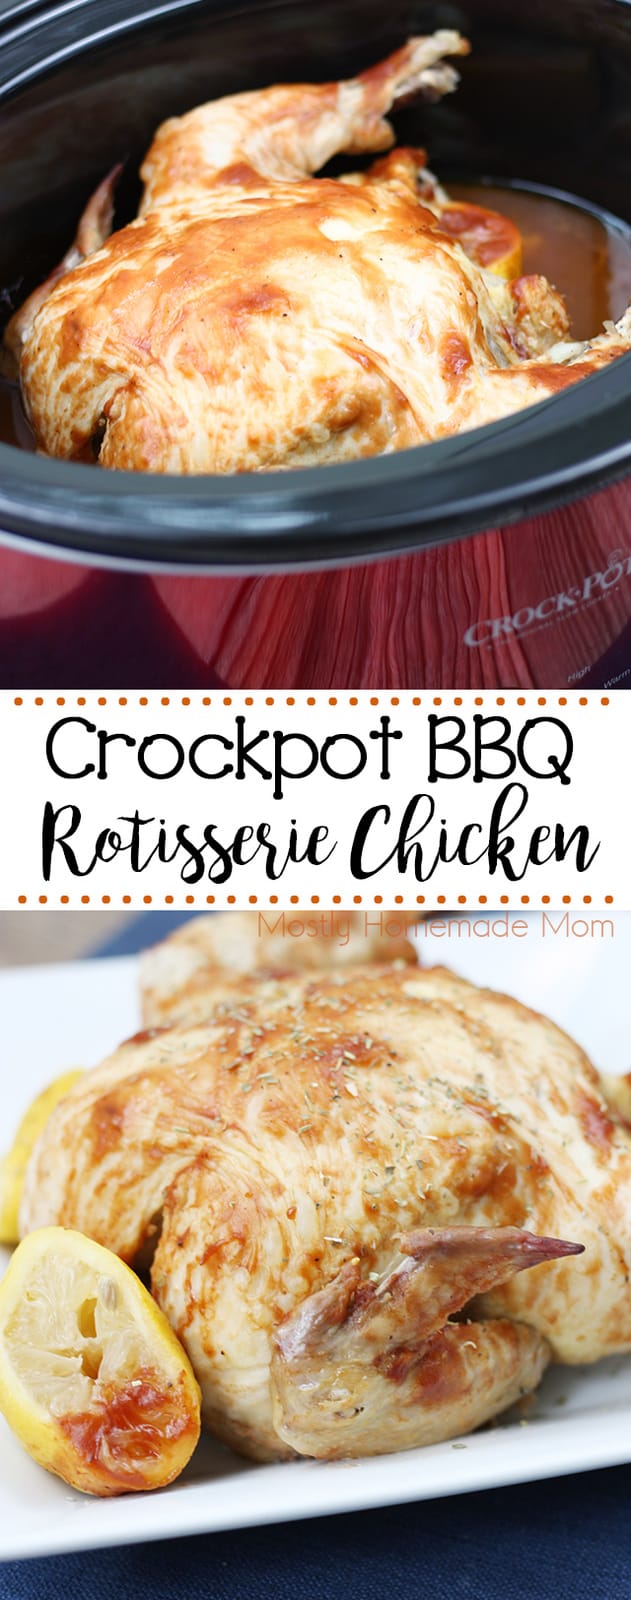 Crockpot BBQ Rotisserie Chicken - Mostly Homemade Mom